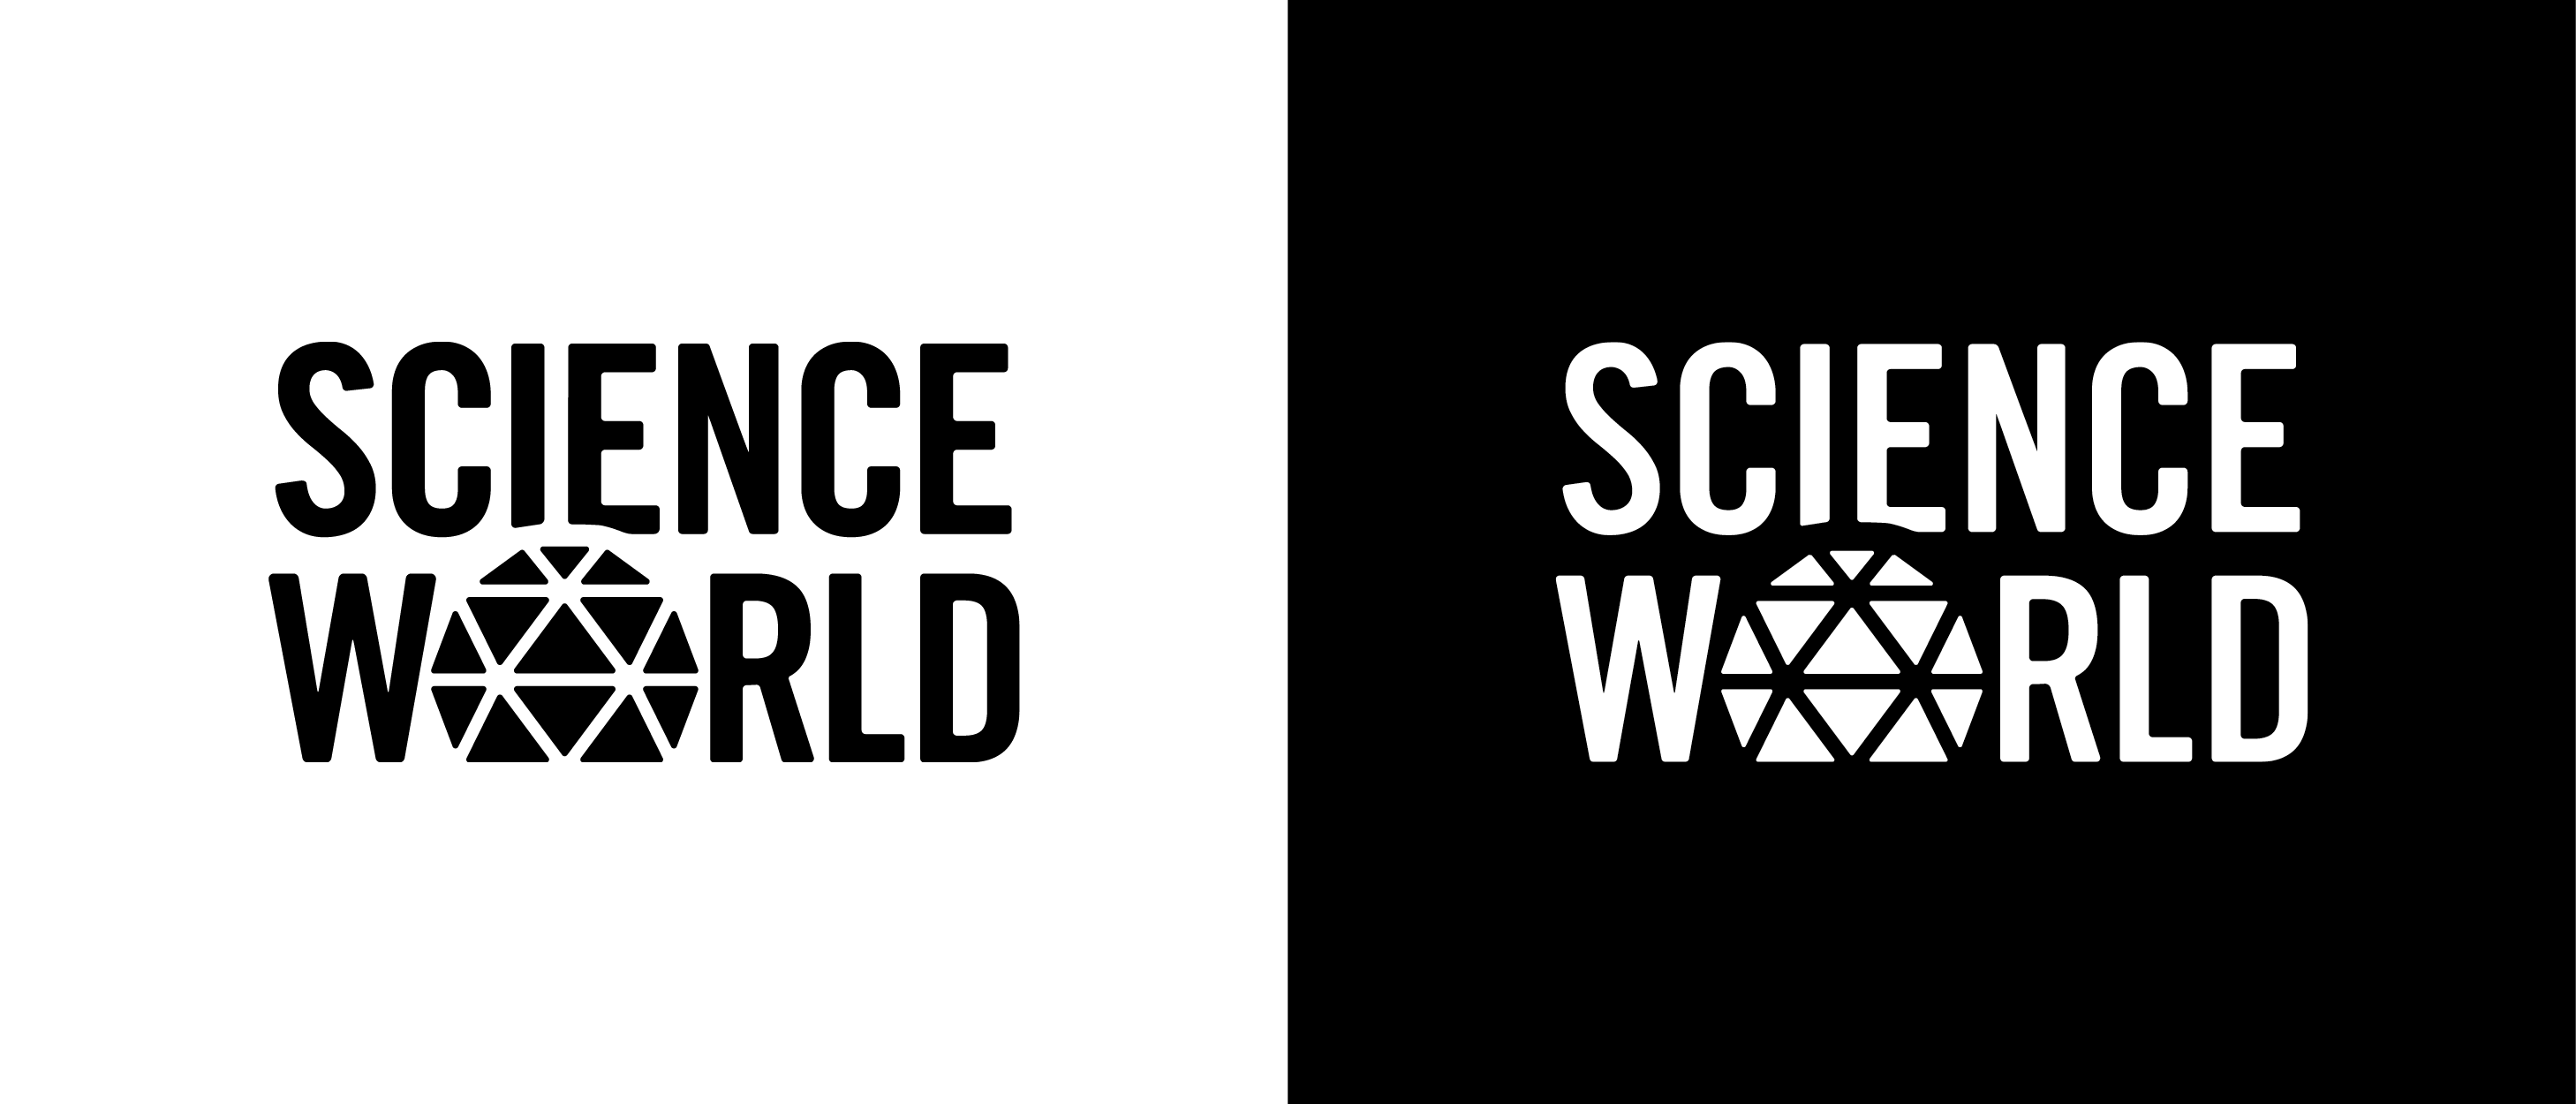 World Scientific (@worldscientific) / X